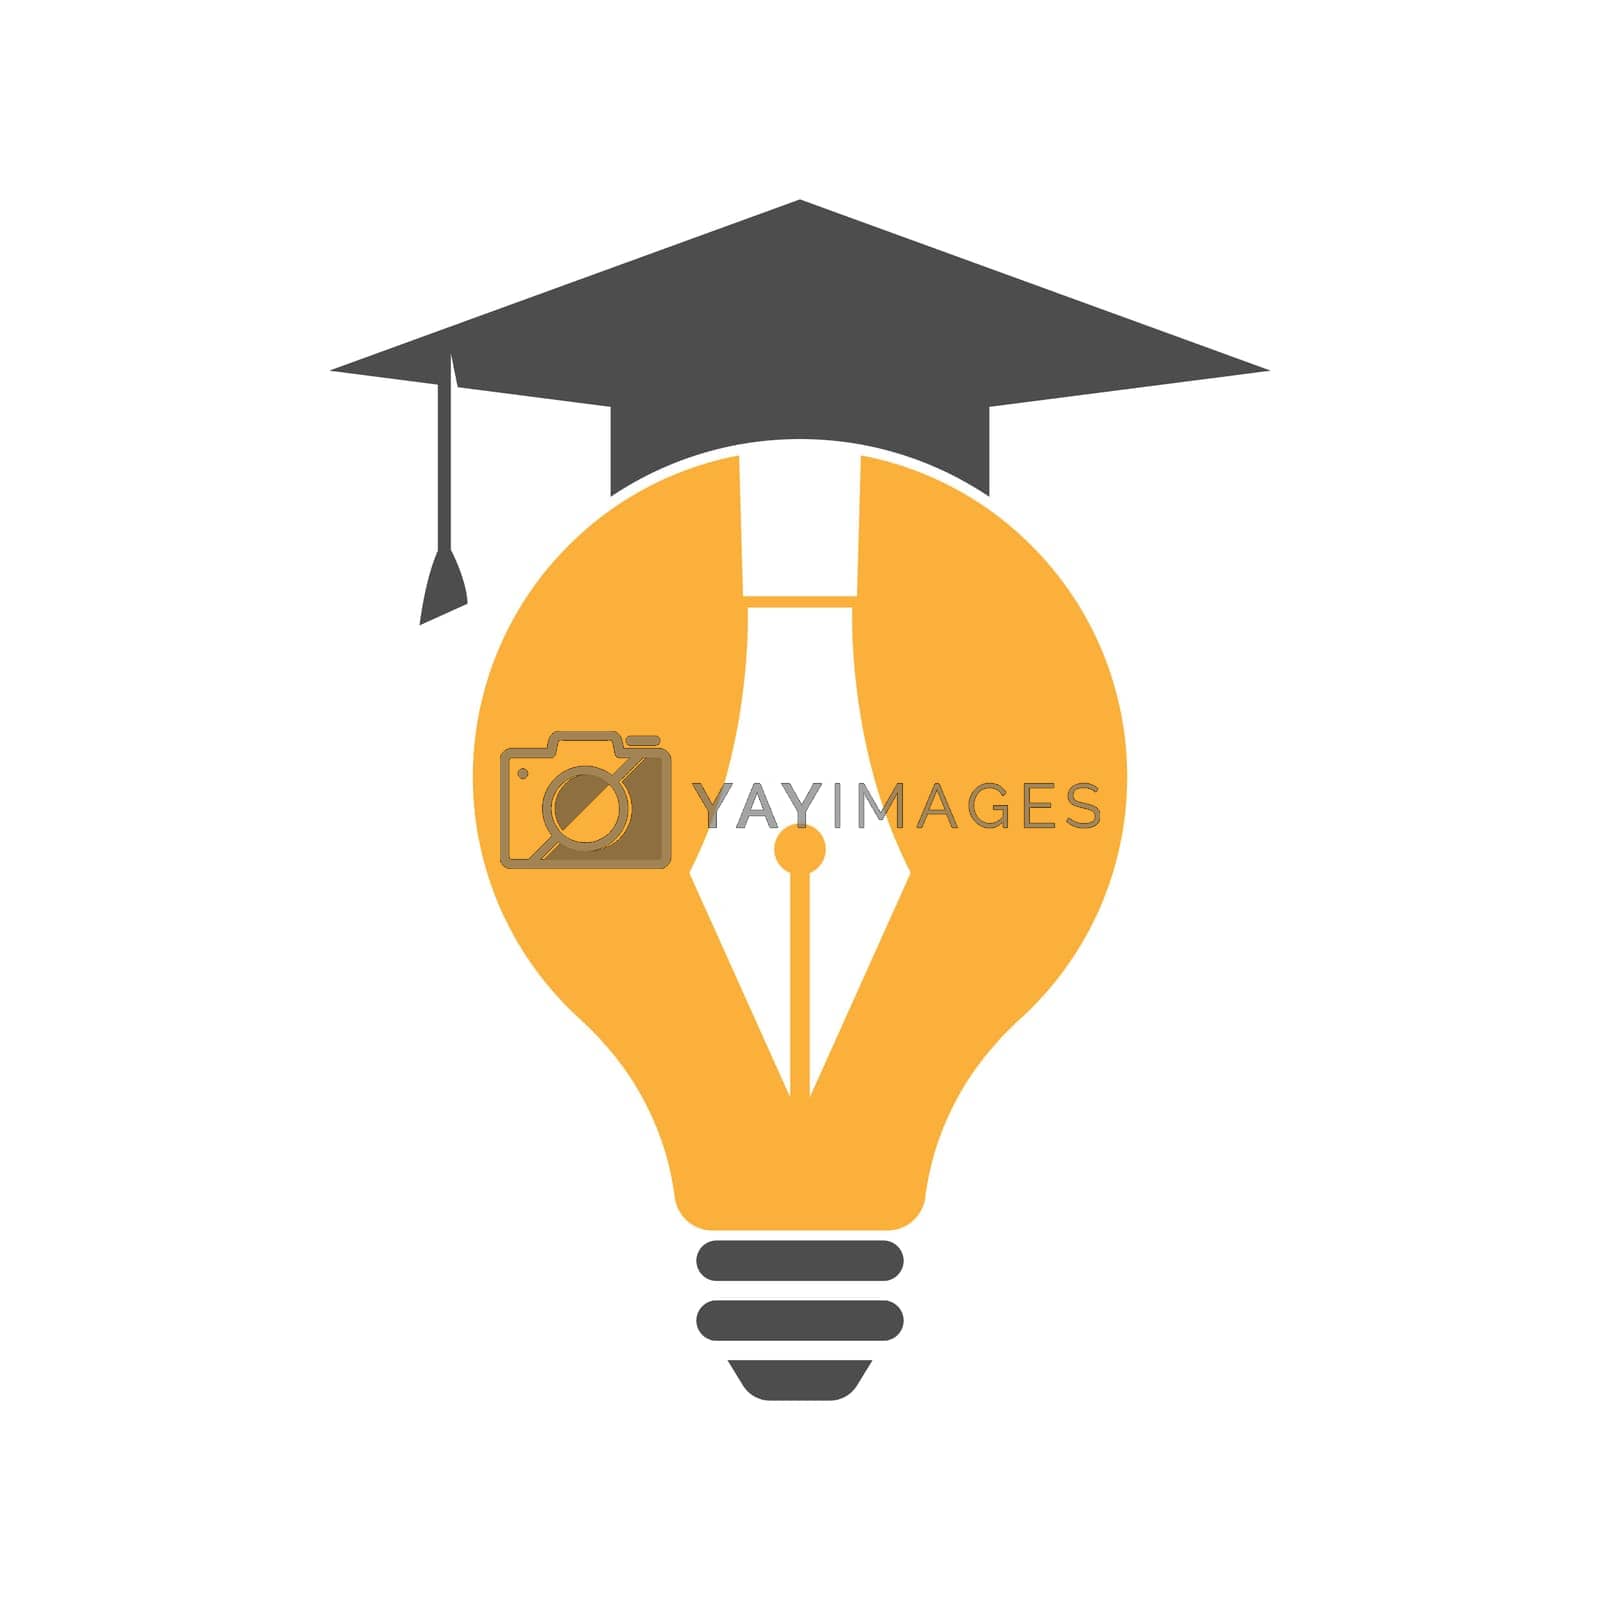 Lamp education icon logo design illustration